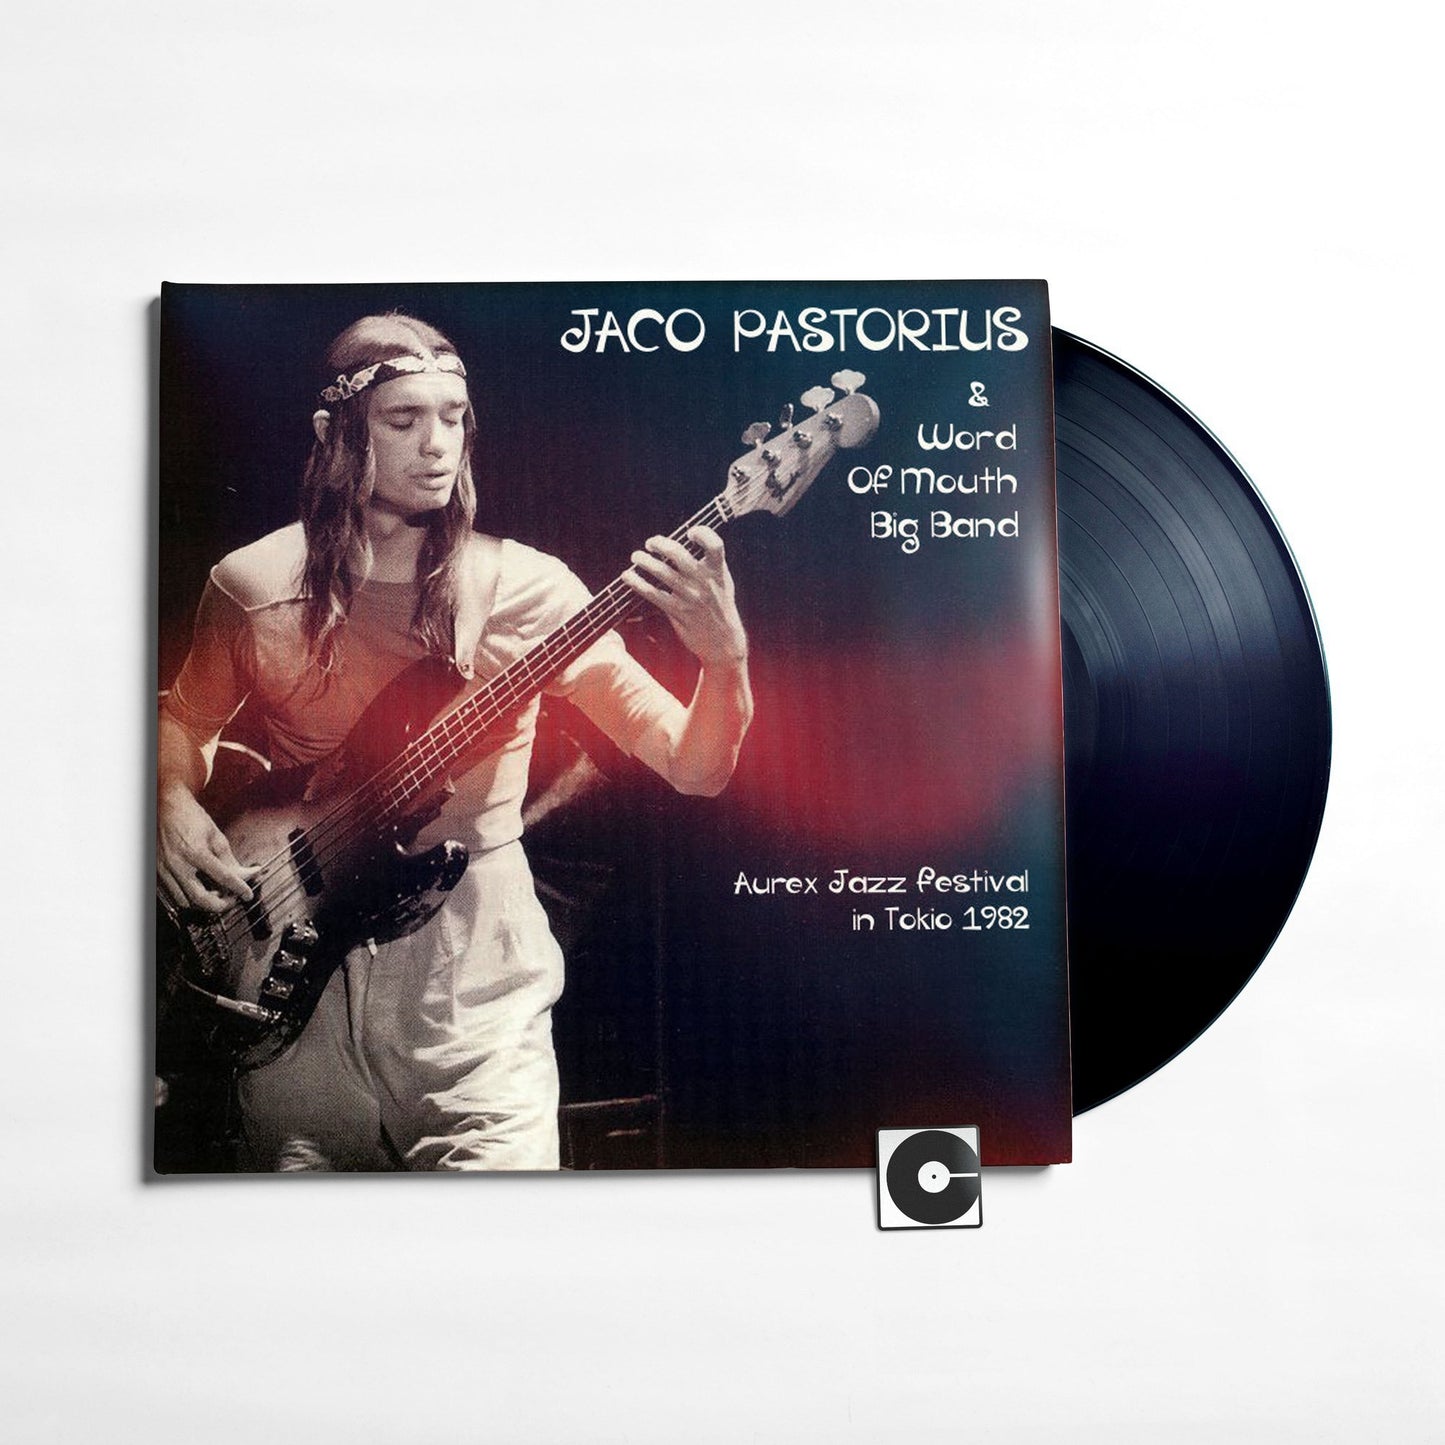 Jaco Pastorius - "Jaco Pastorius And Word Of Mouth Big Band: Aurex Jazz Festival In Tokyo 1982"